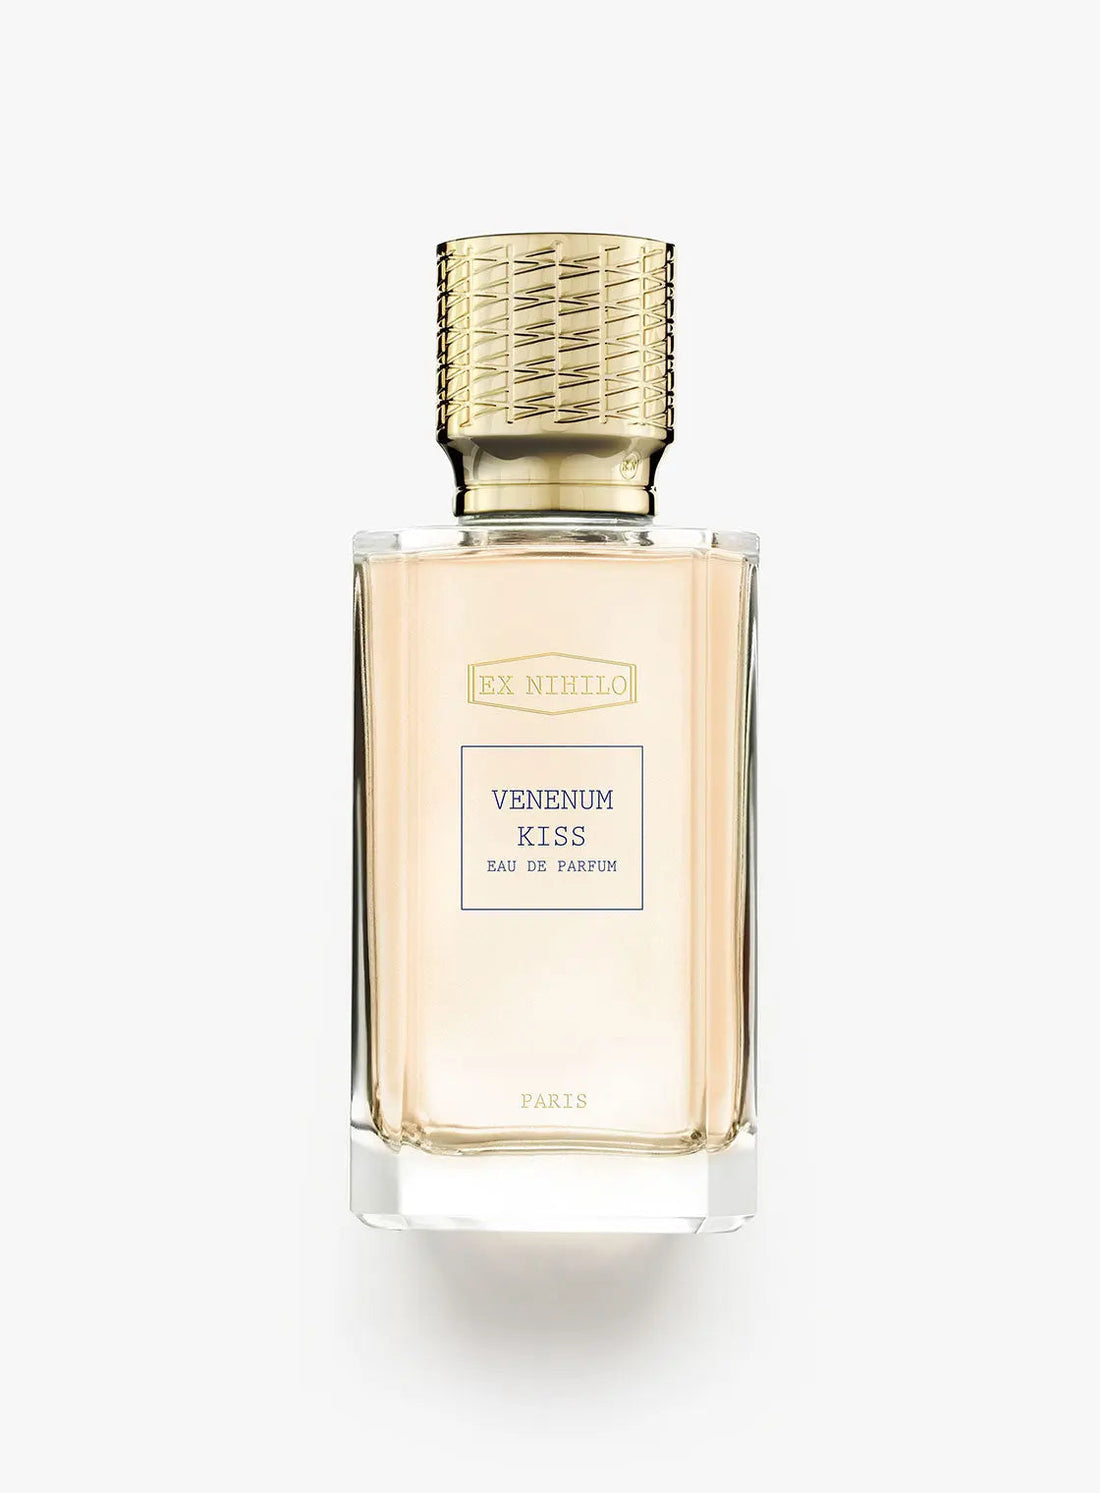 Ex nihilo Venenum Kiss eau de parfum - 100 ml